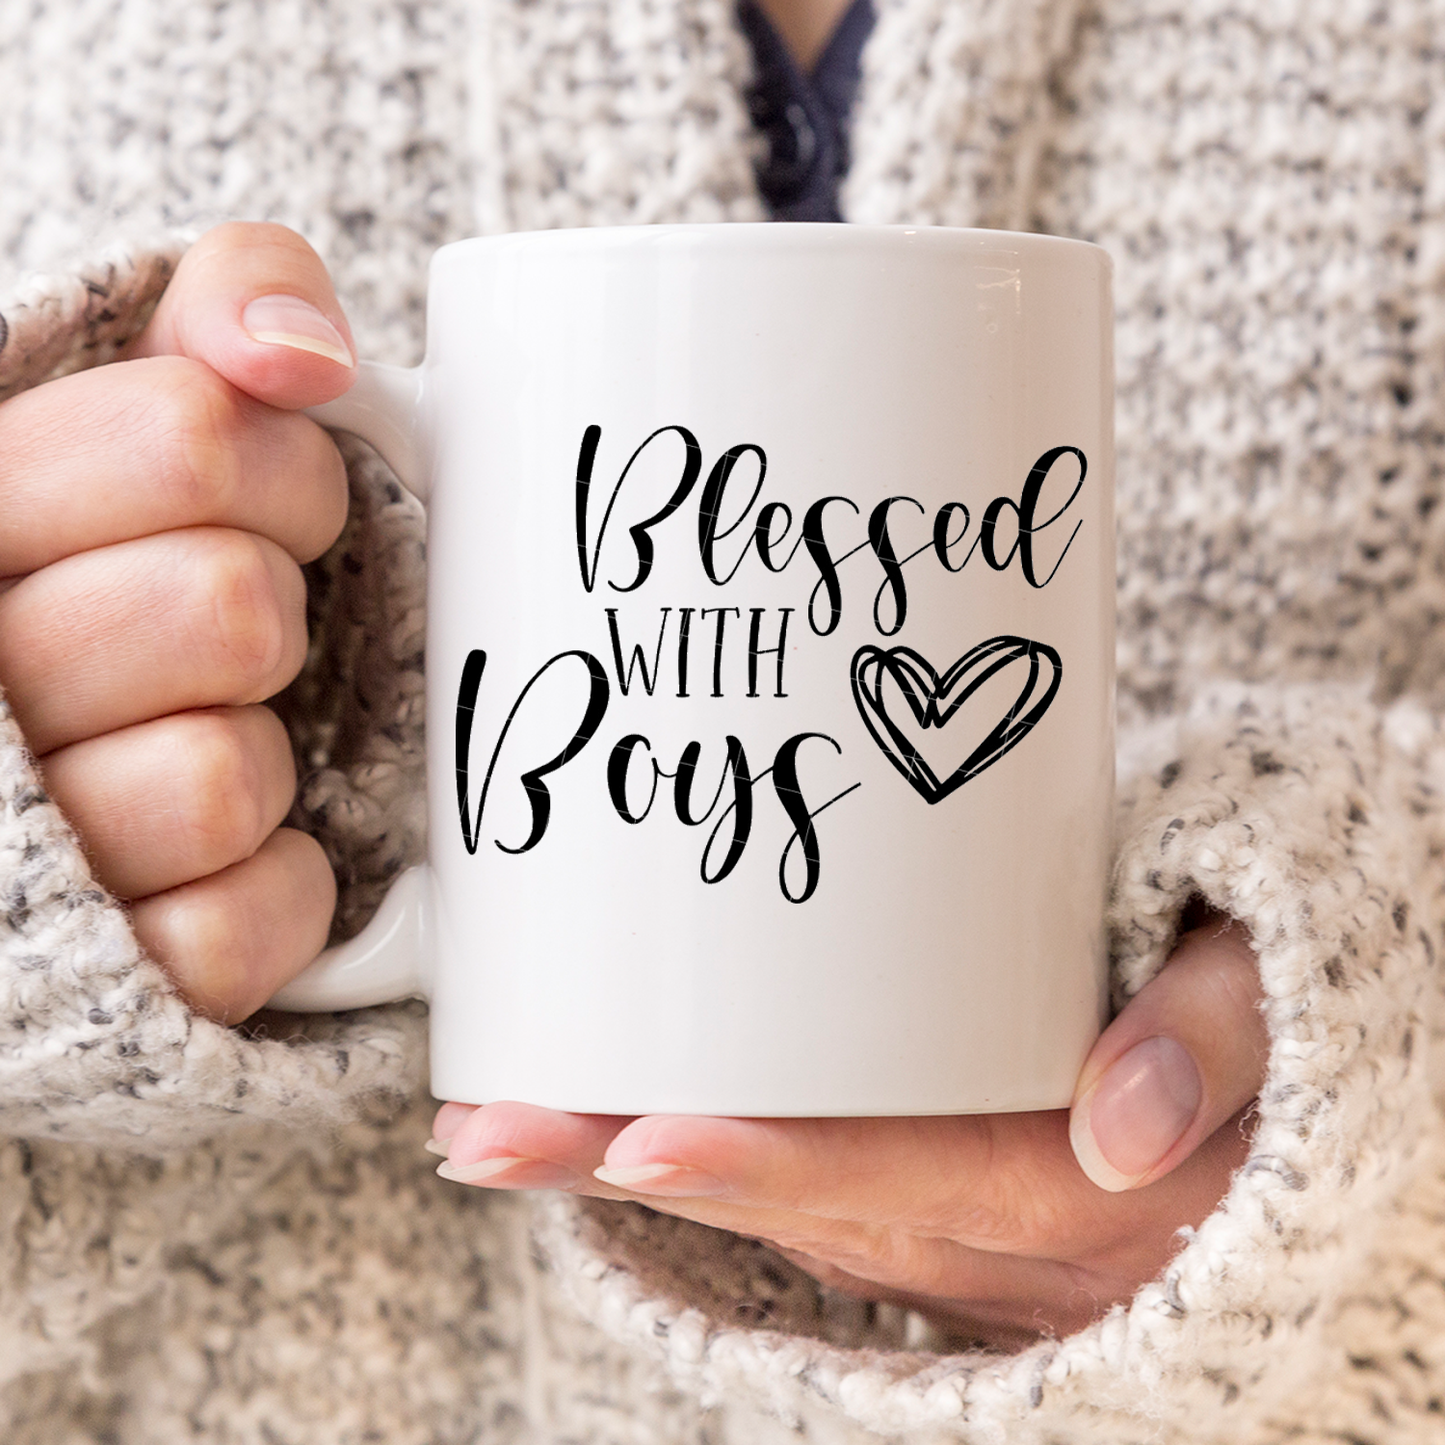 Blessed with Boys - cute coffee/tea Mug.